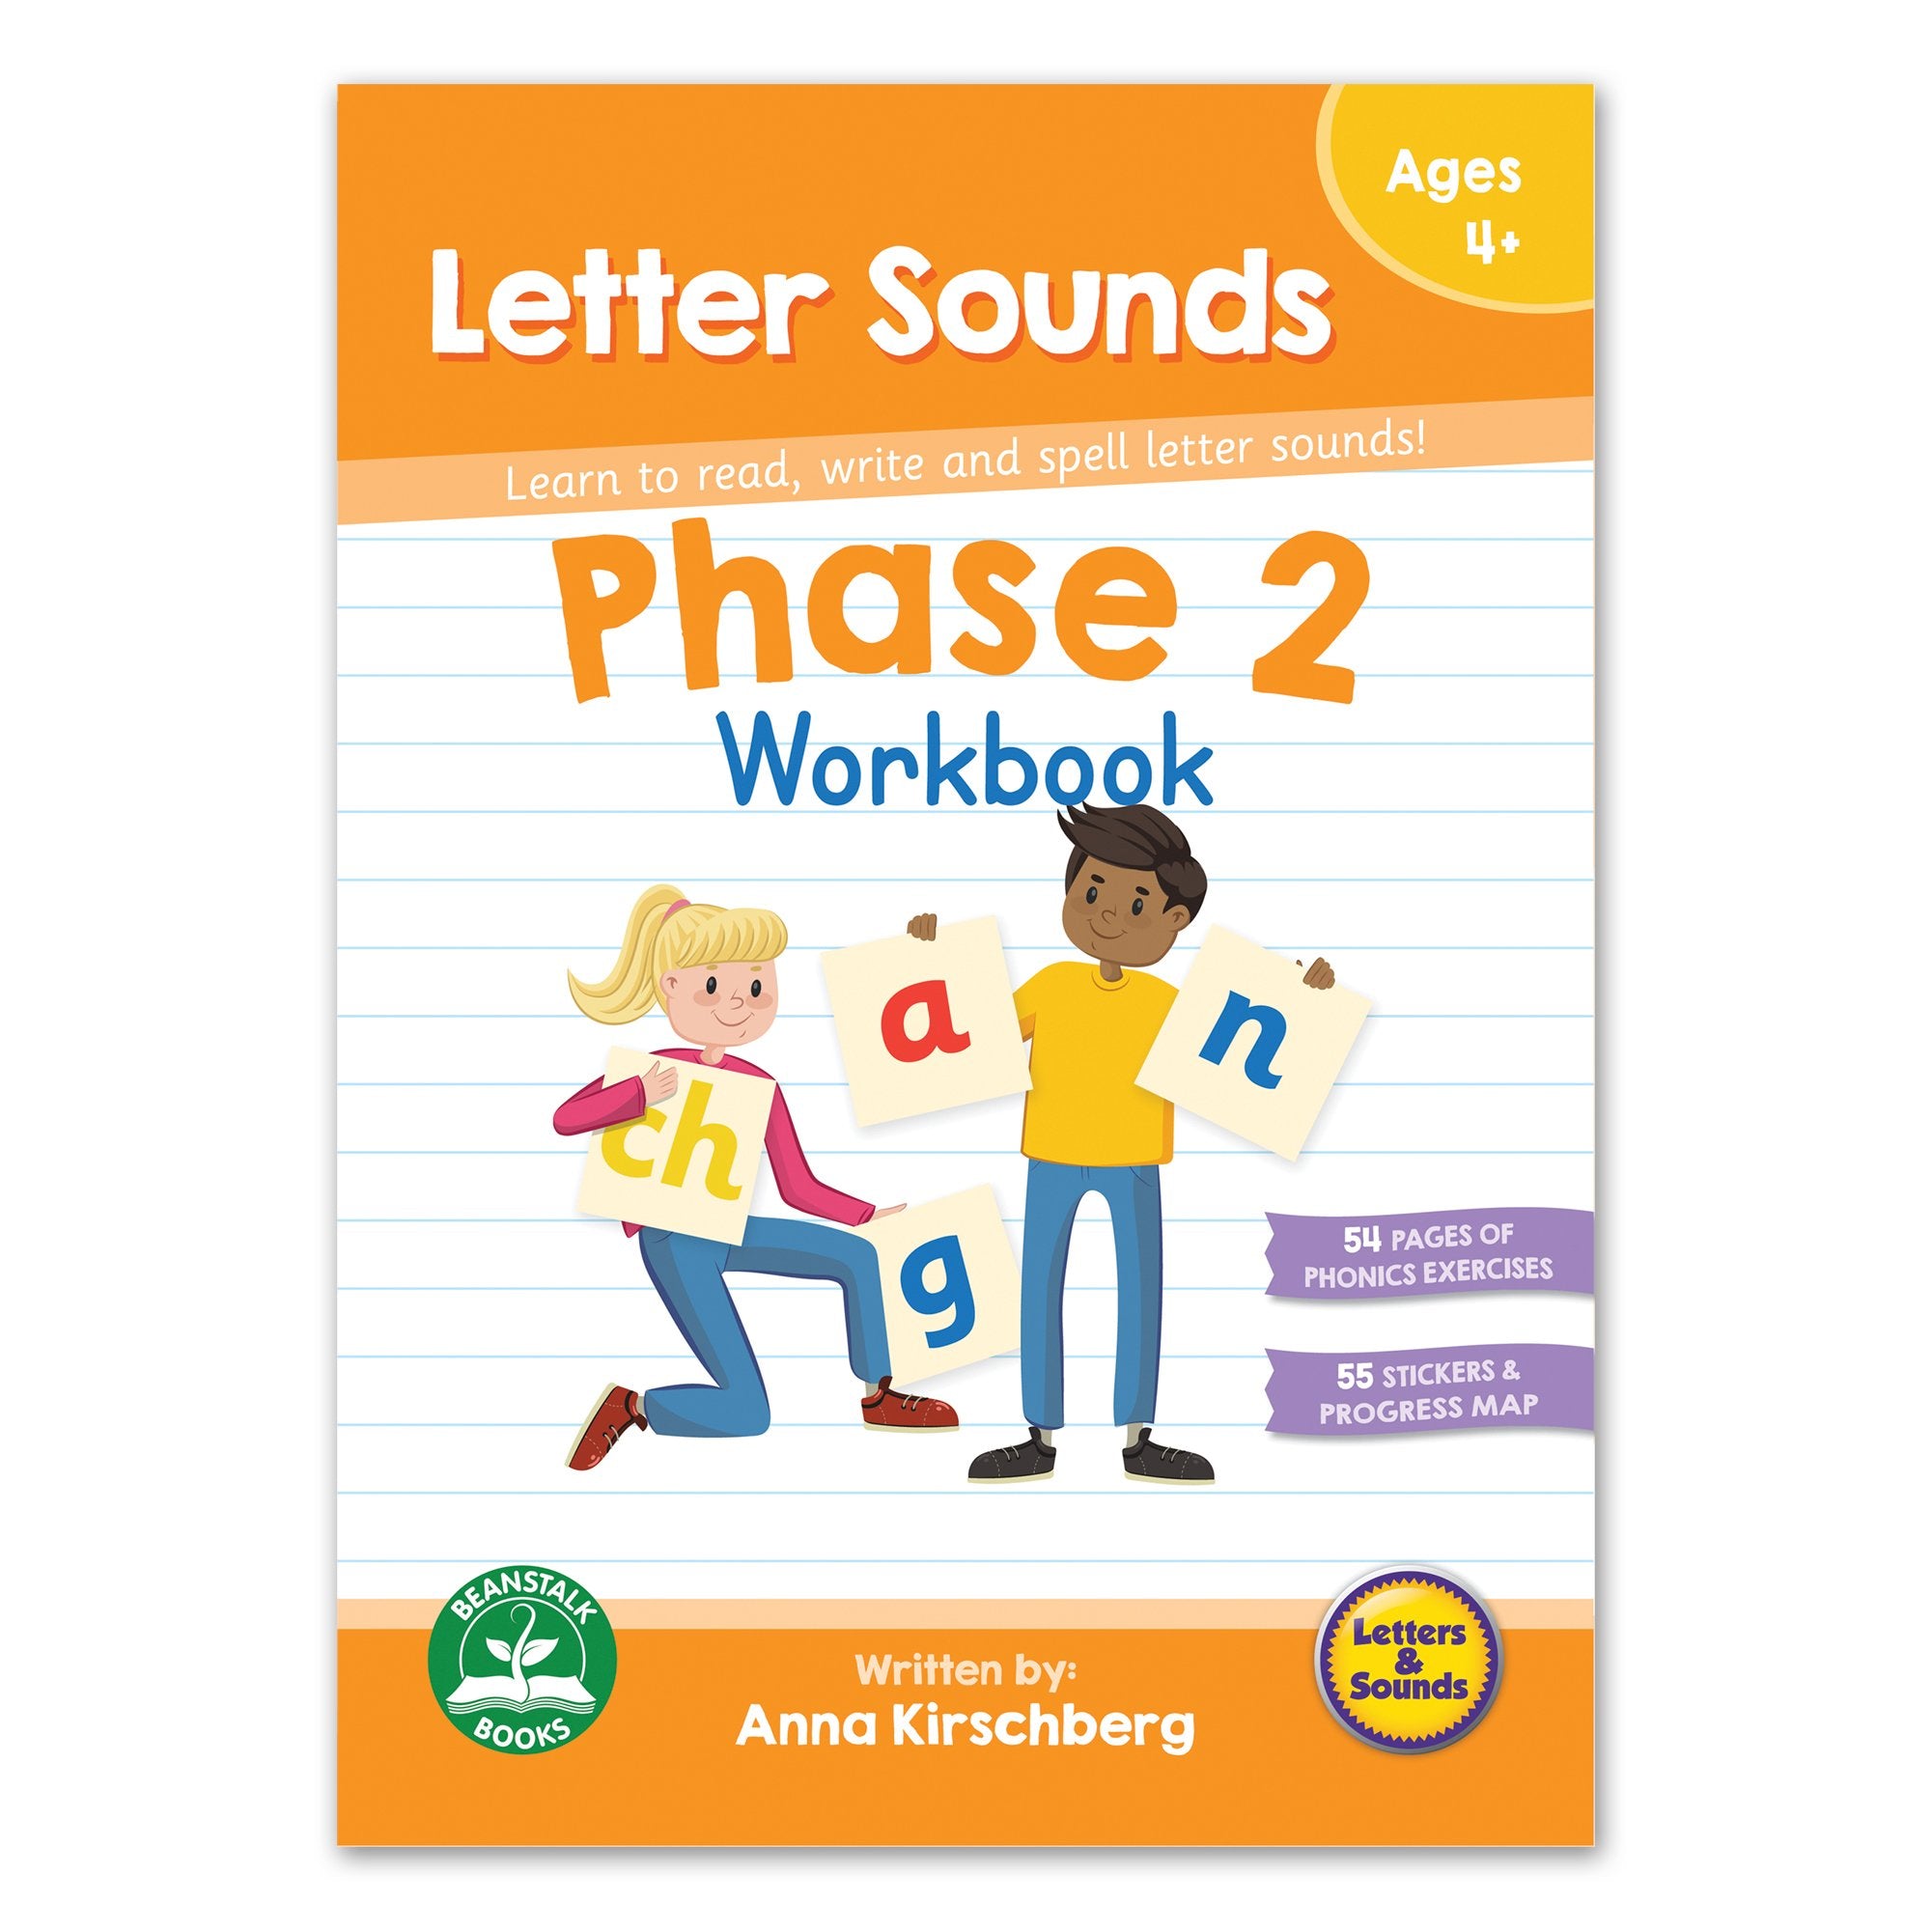 Phase 2 Letter Sounds Workbook